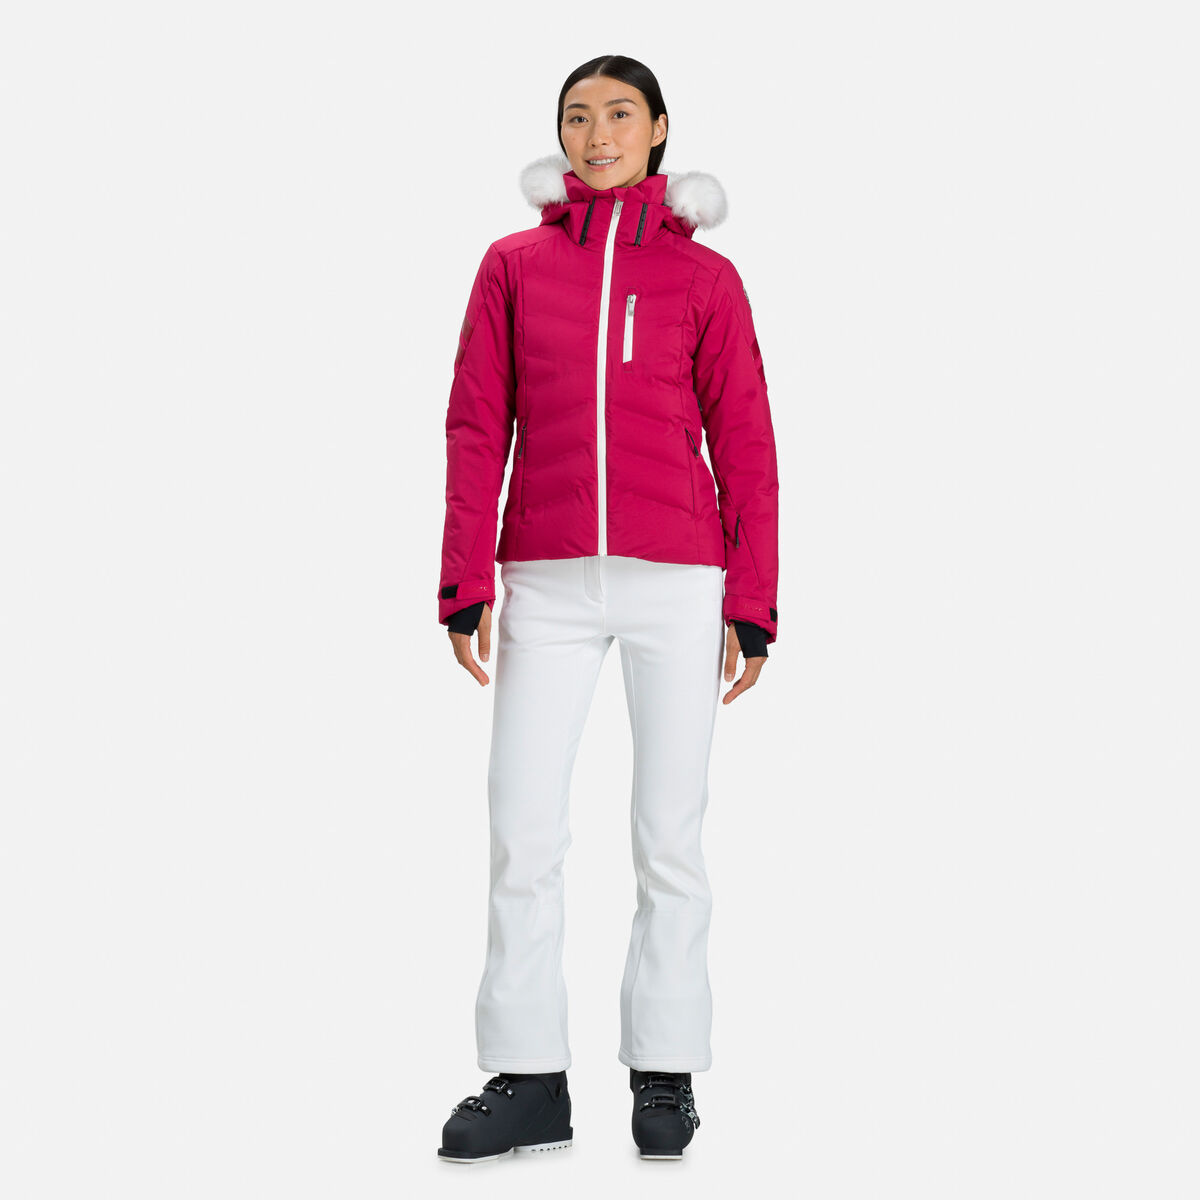 Women's Depart ski jacket